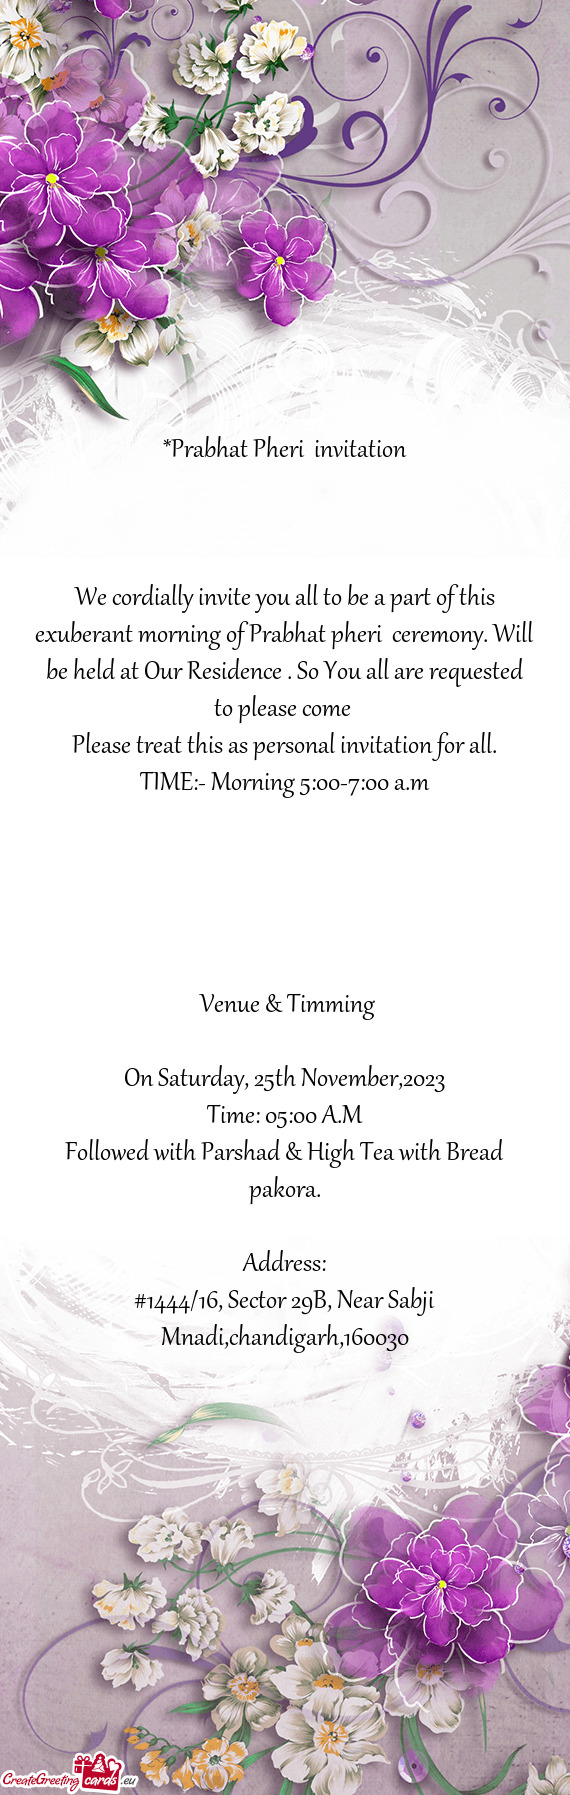 Followed with Parshad & High Tea with Bread pakora